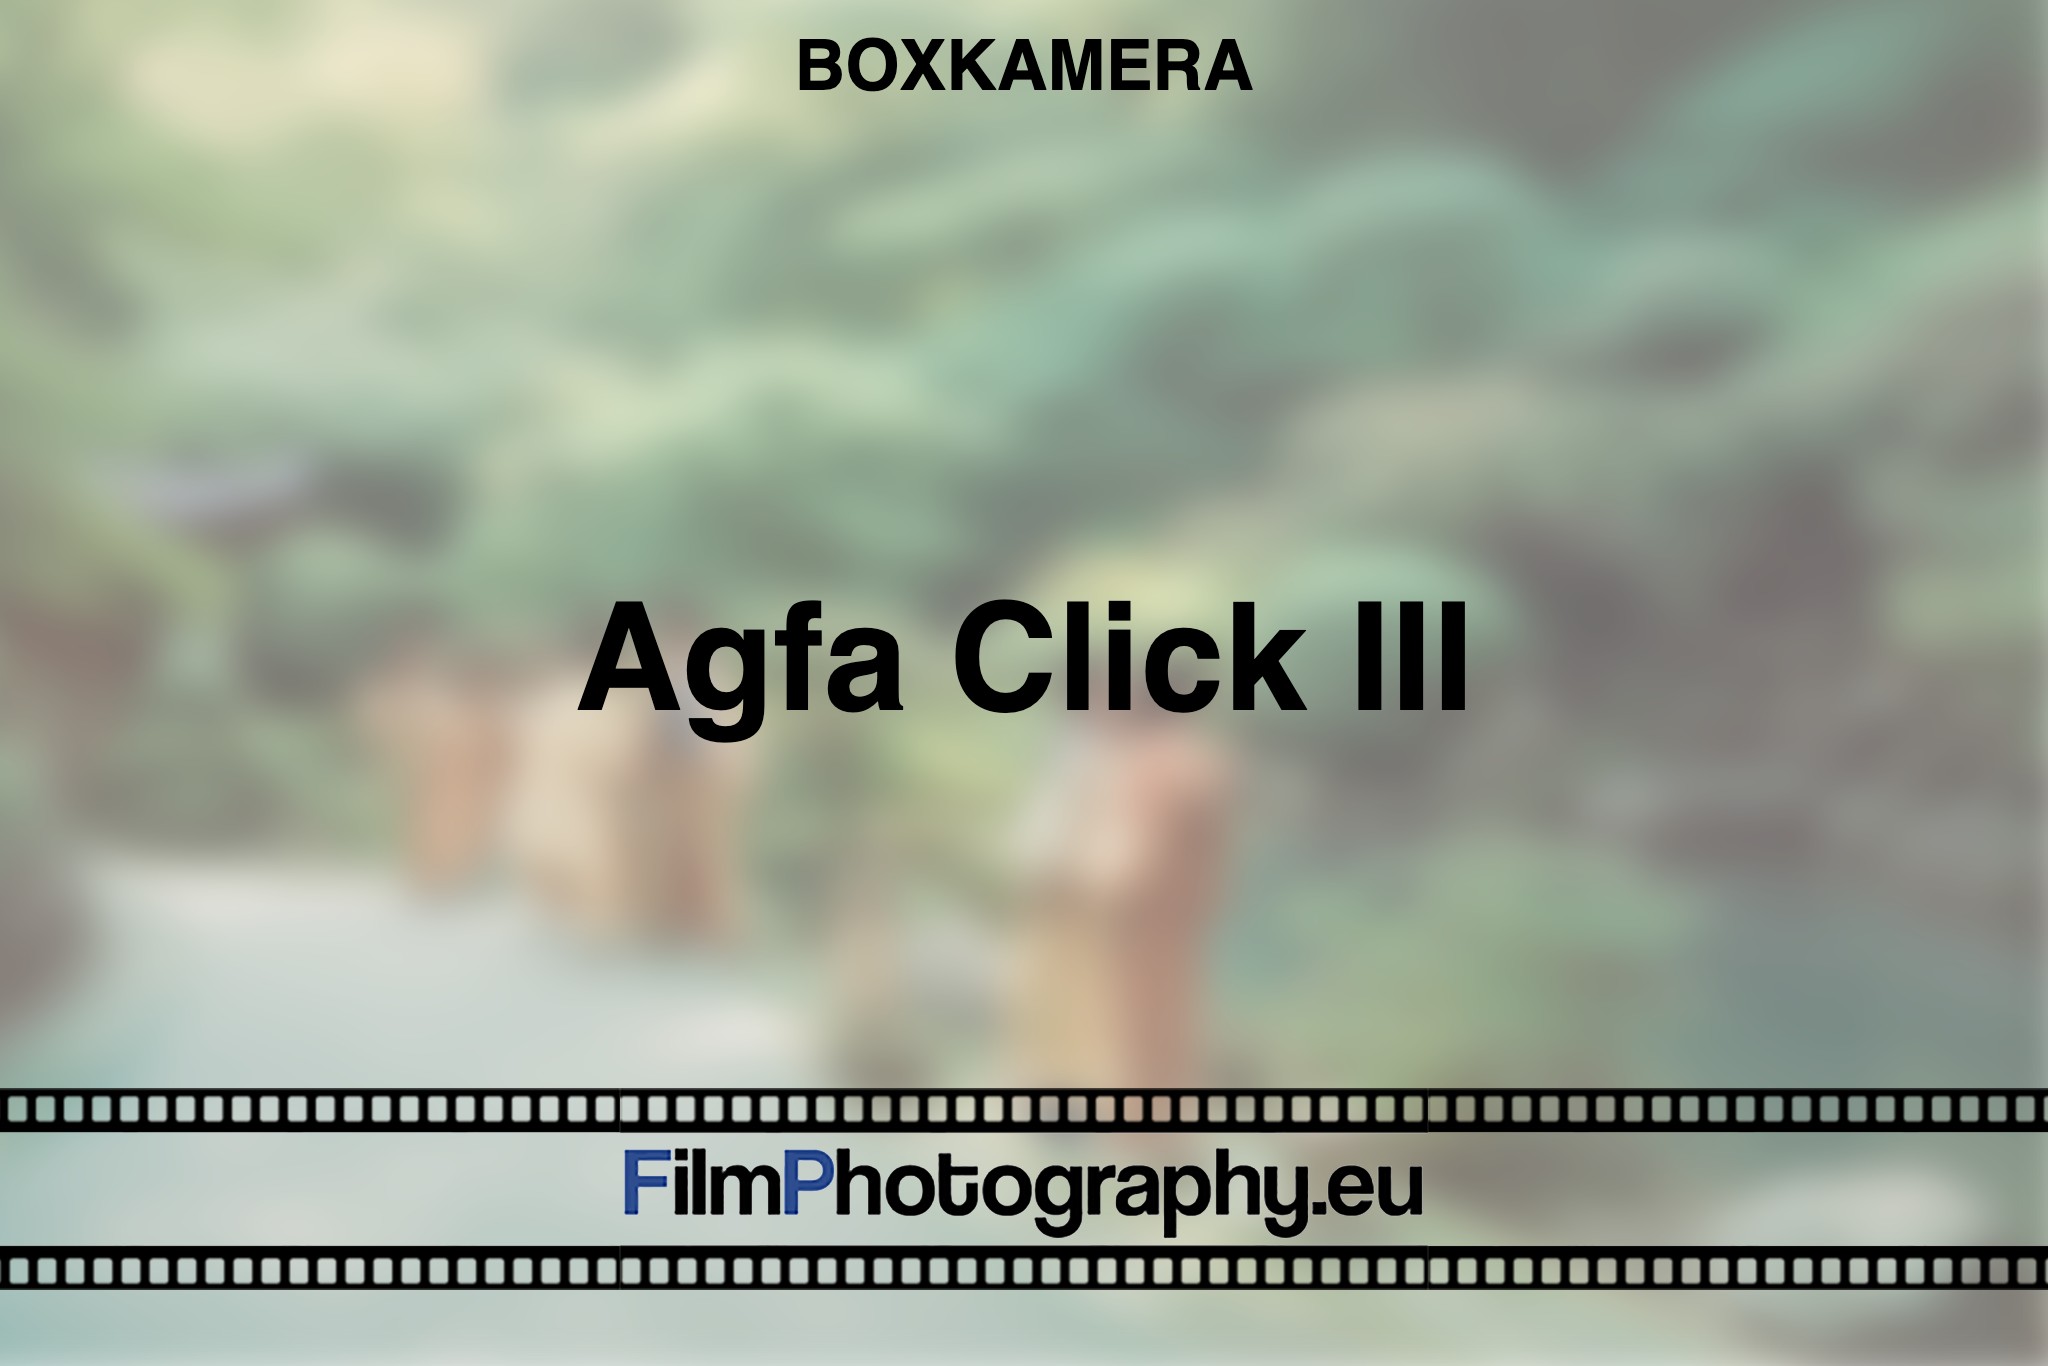 agfa-click-iii-boxkamera-bnv